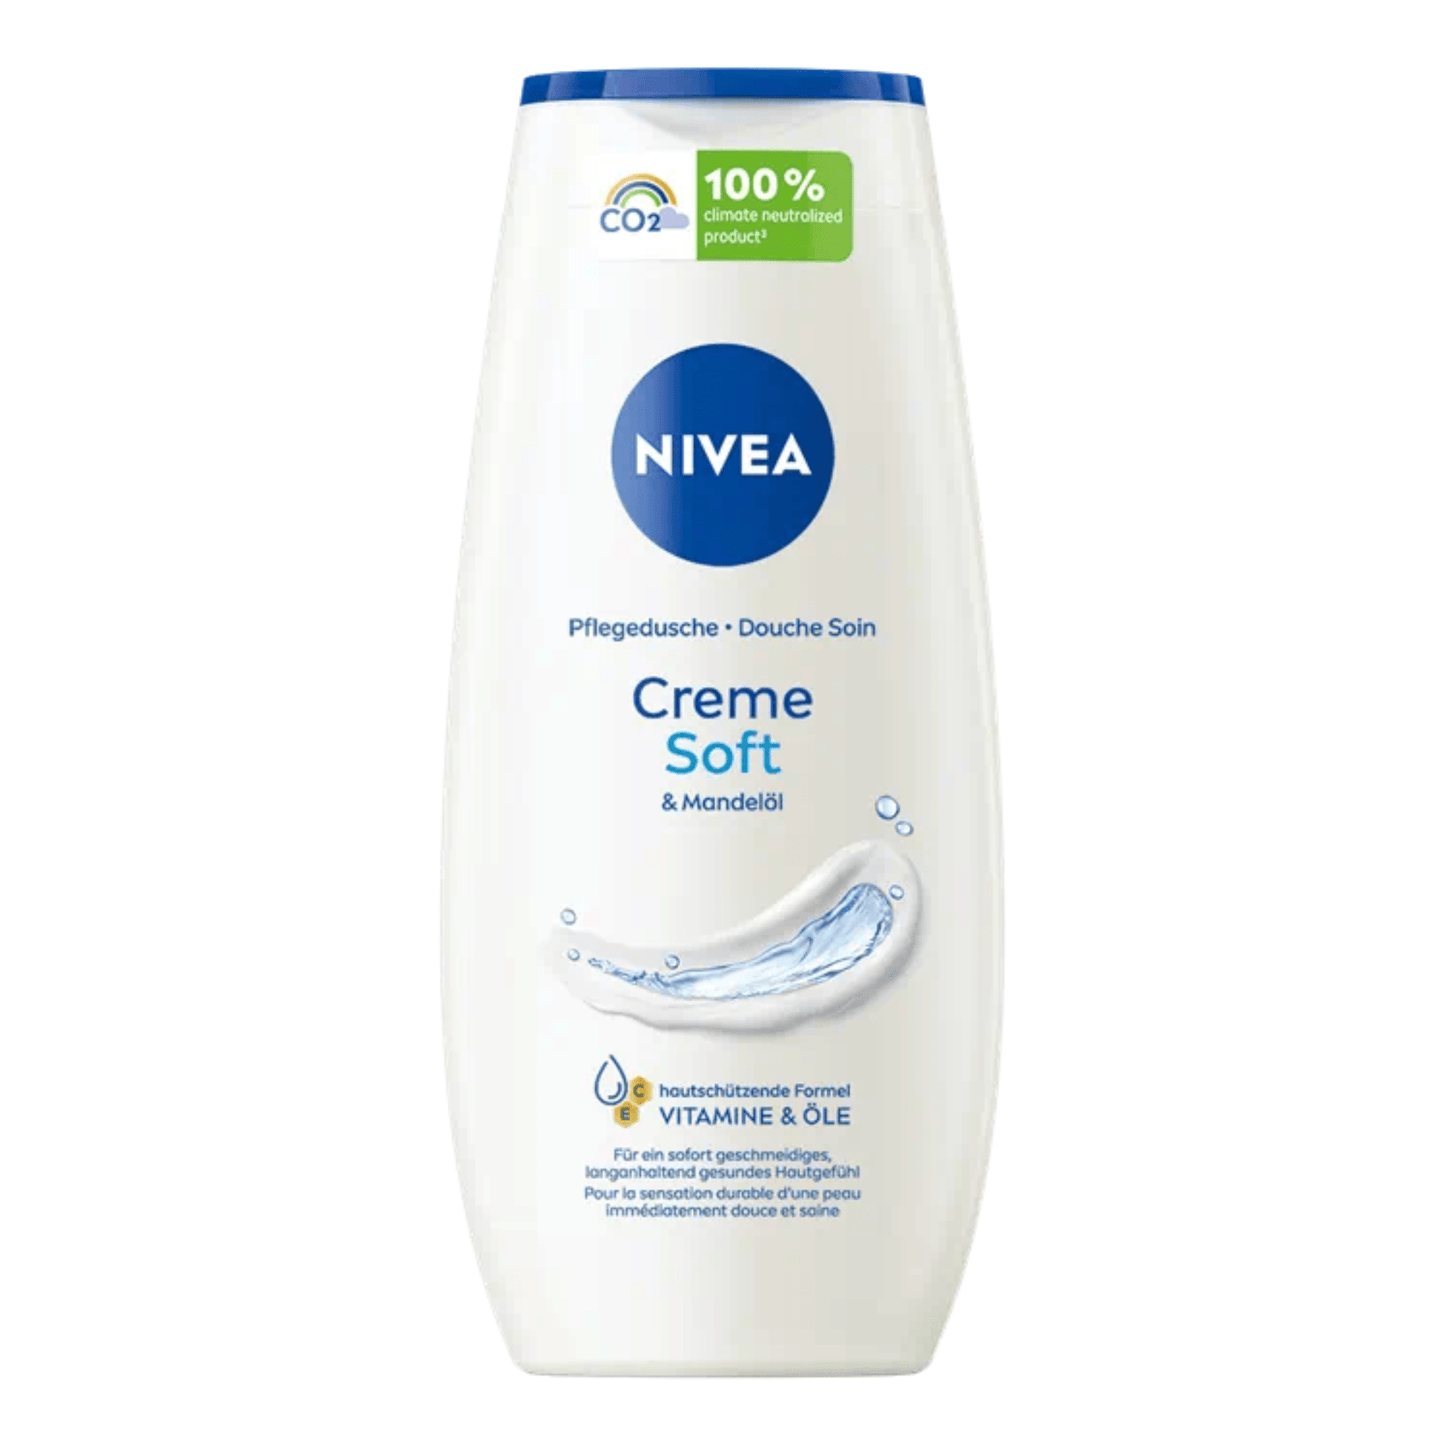 Primary Image of Cream Soft Body Wash